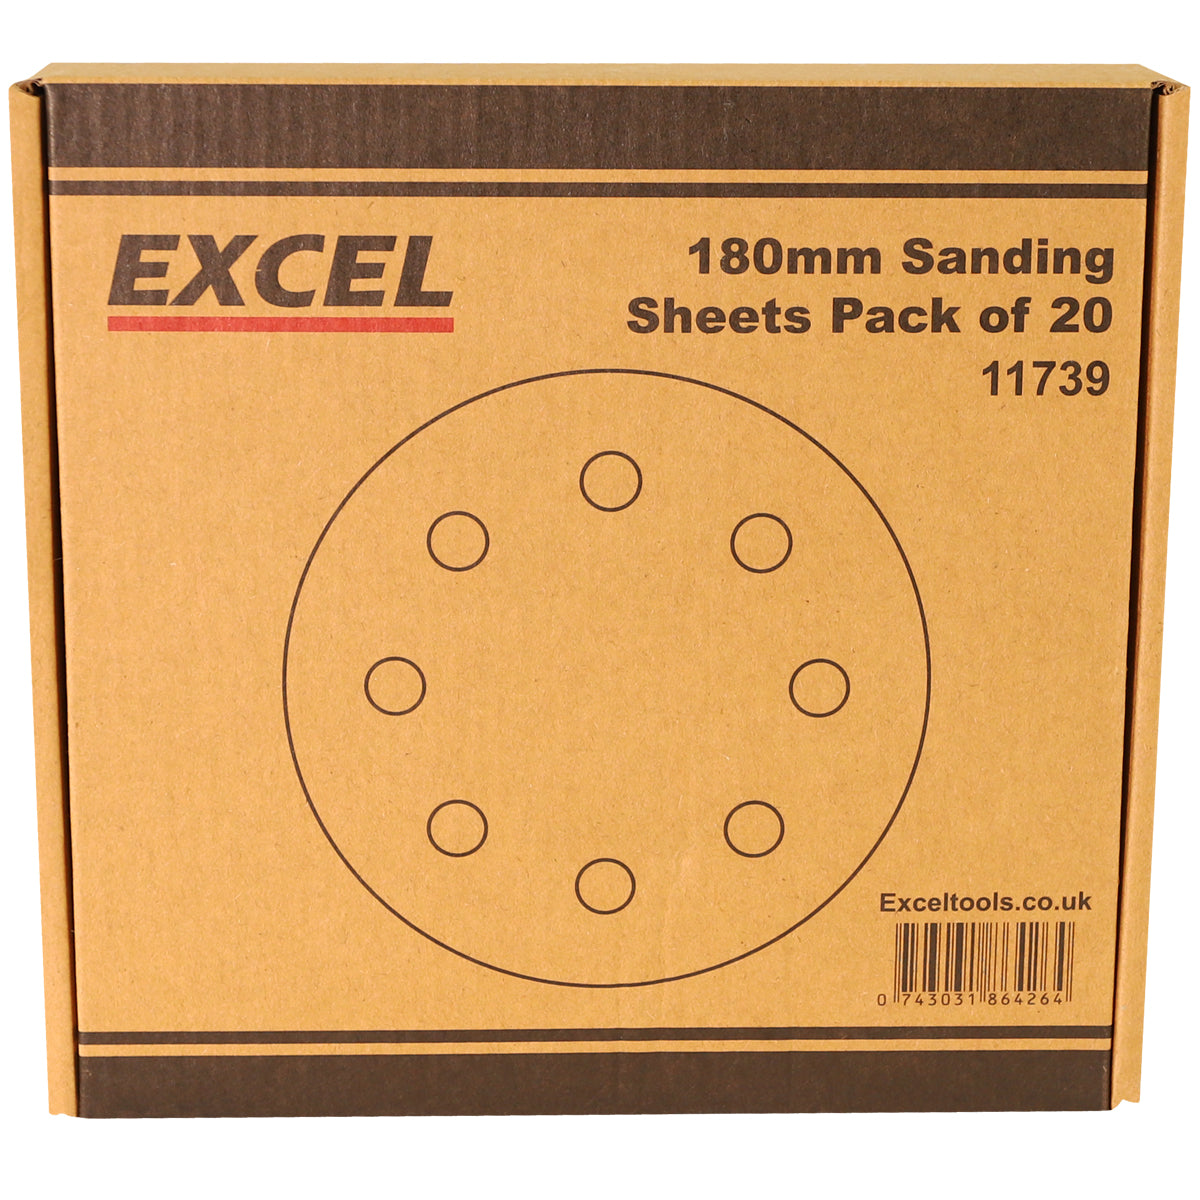 Excel 180mm Sanding Sheet Pack of 20 Piece